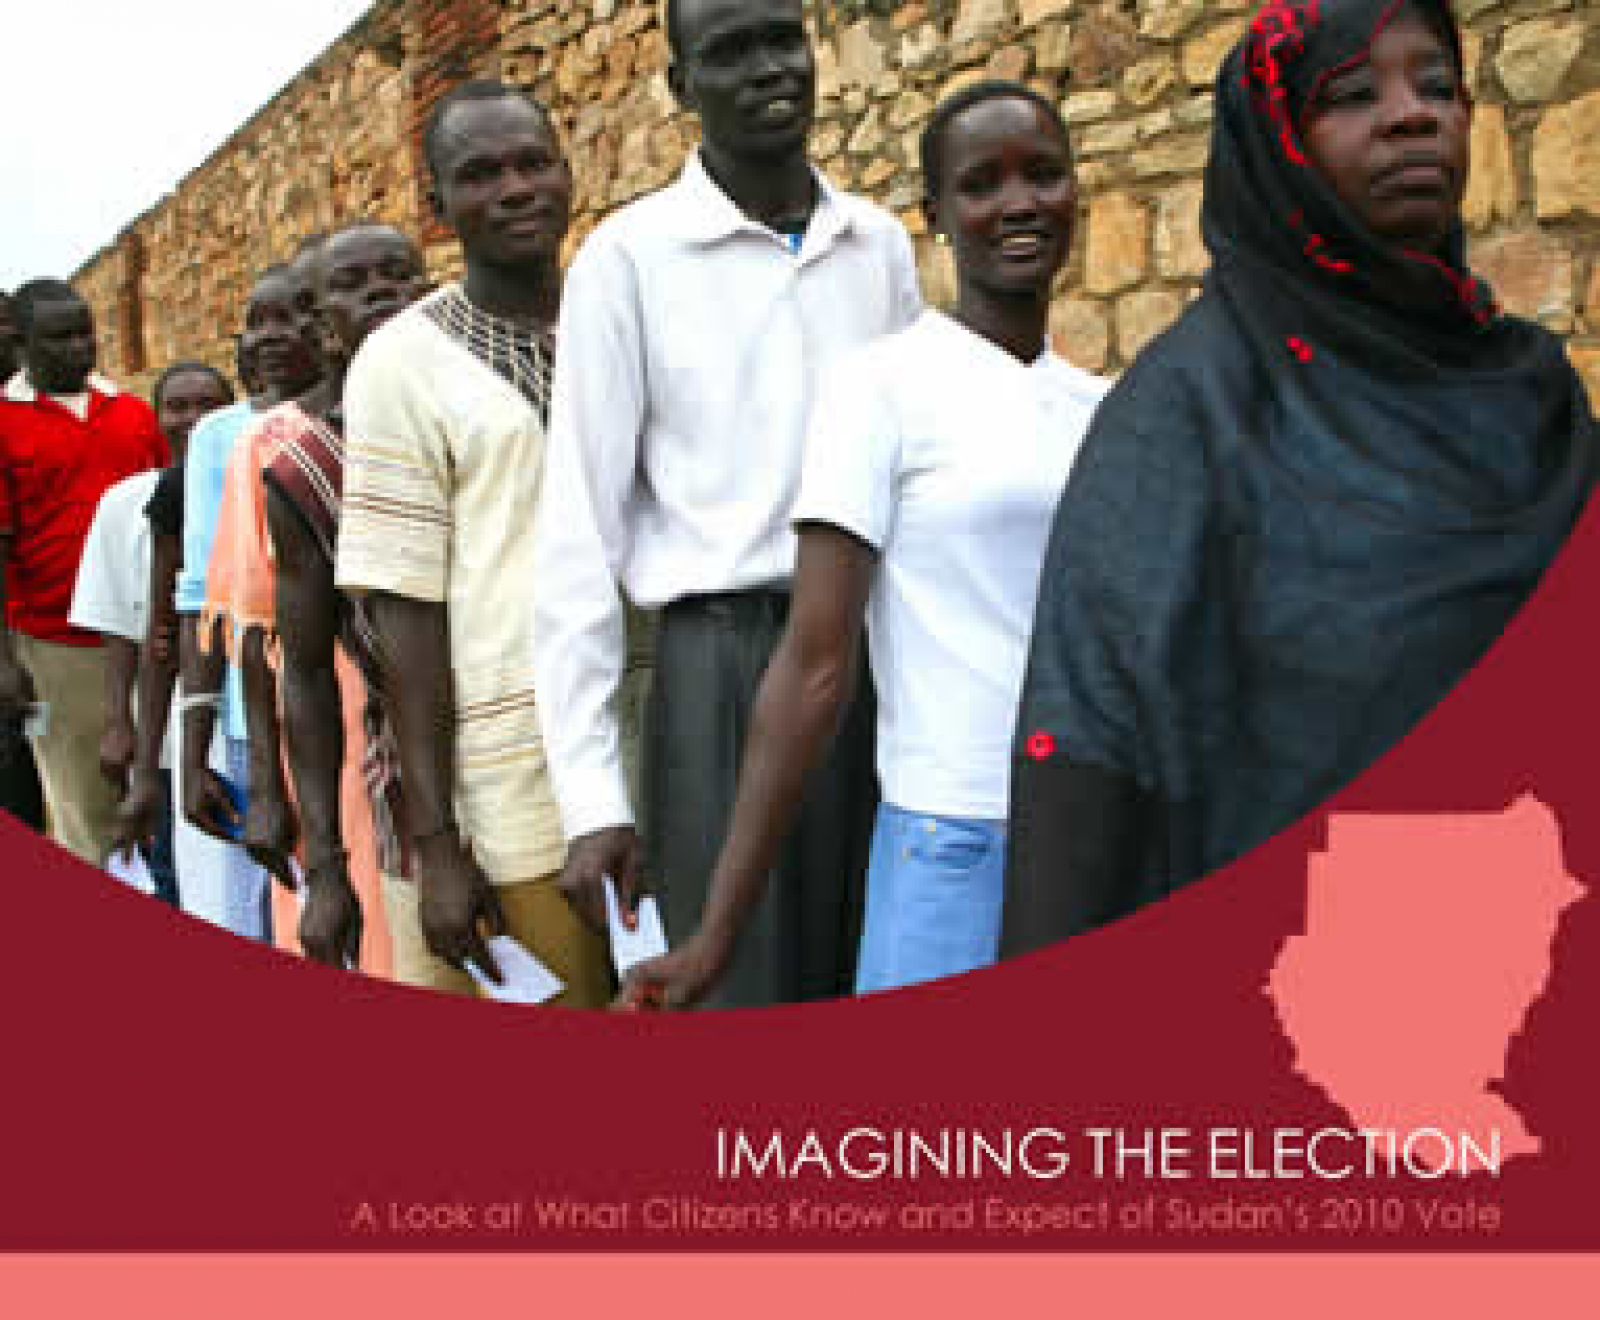 Imagining the Election: NDI Report Explores Attitudes About 2010 Sudan Vote